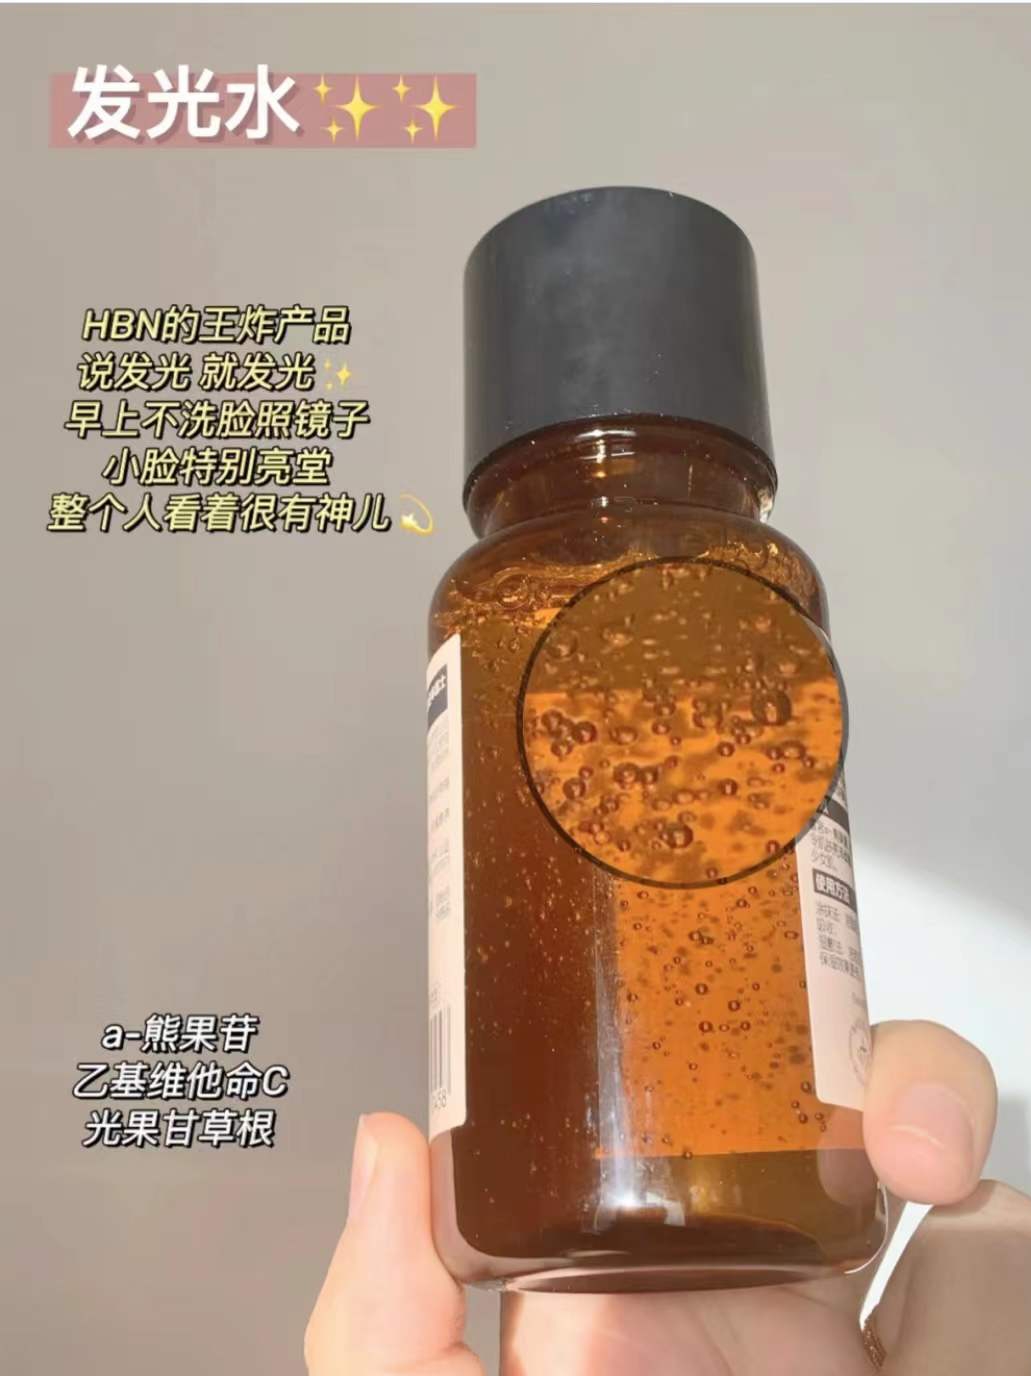 HBN a-熊果苷精粹水发光水精华爽肤水提亮肤色补水滋润祛黄150ml - 图0